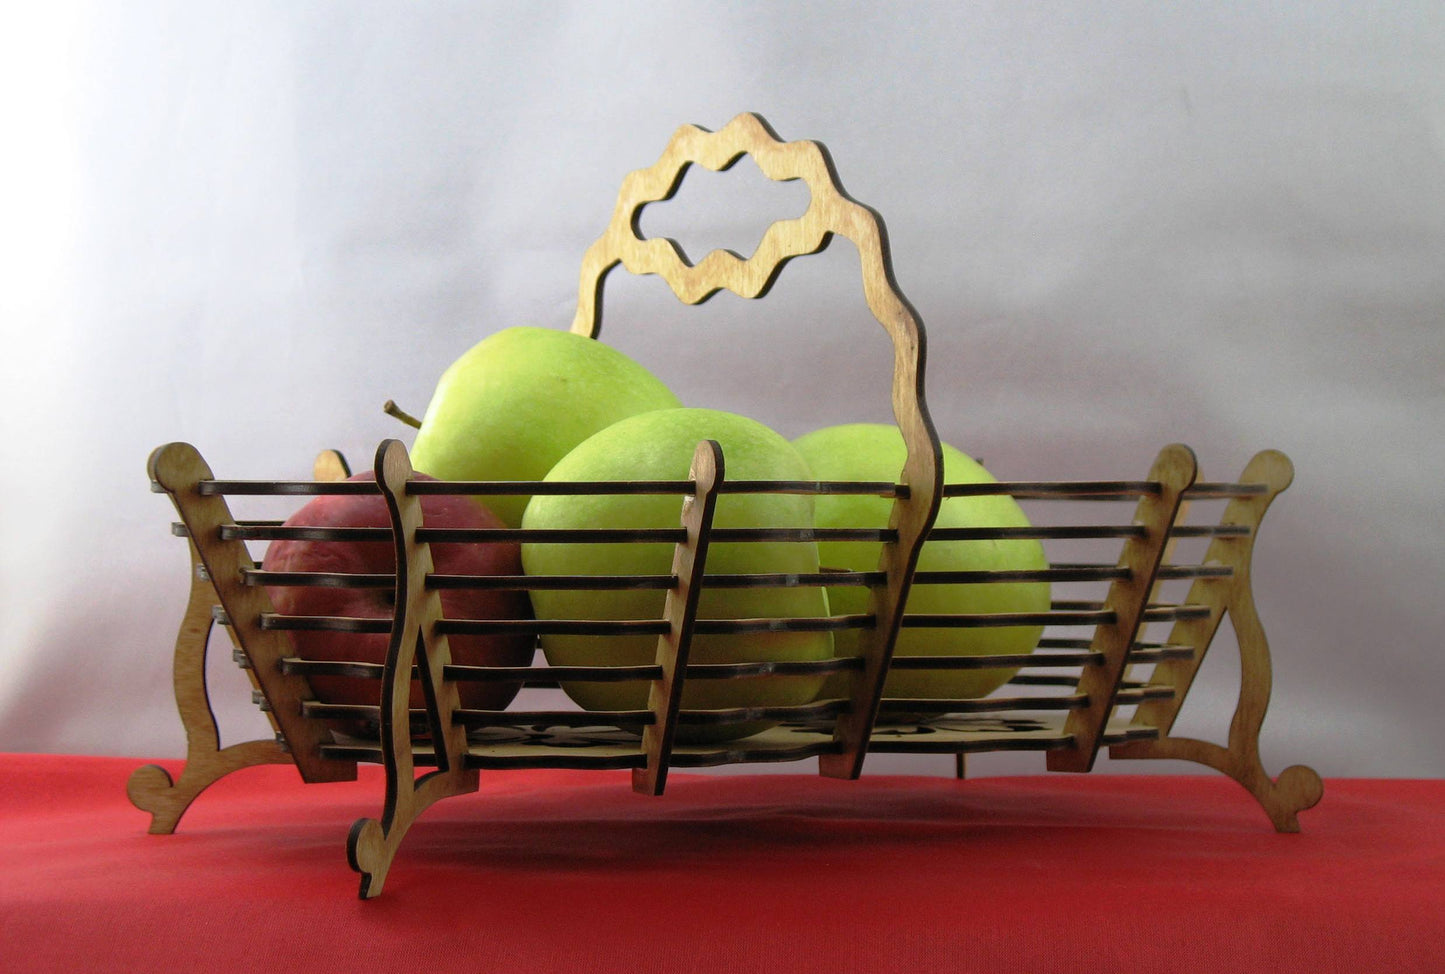 Basket Decorative Wooden Kit